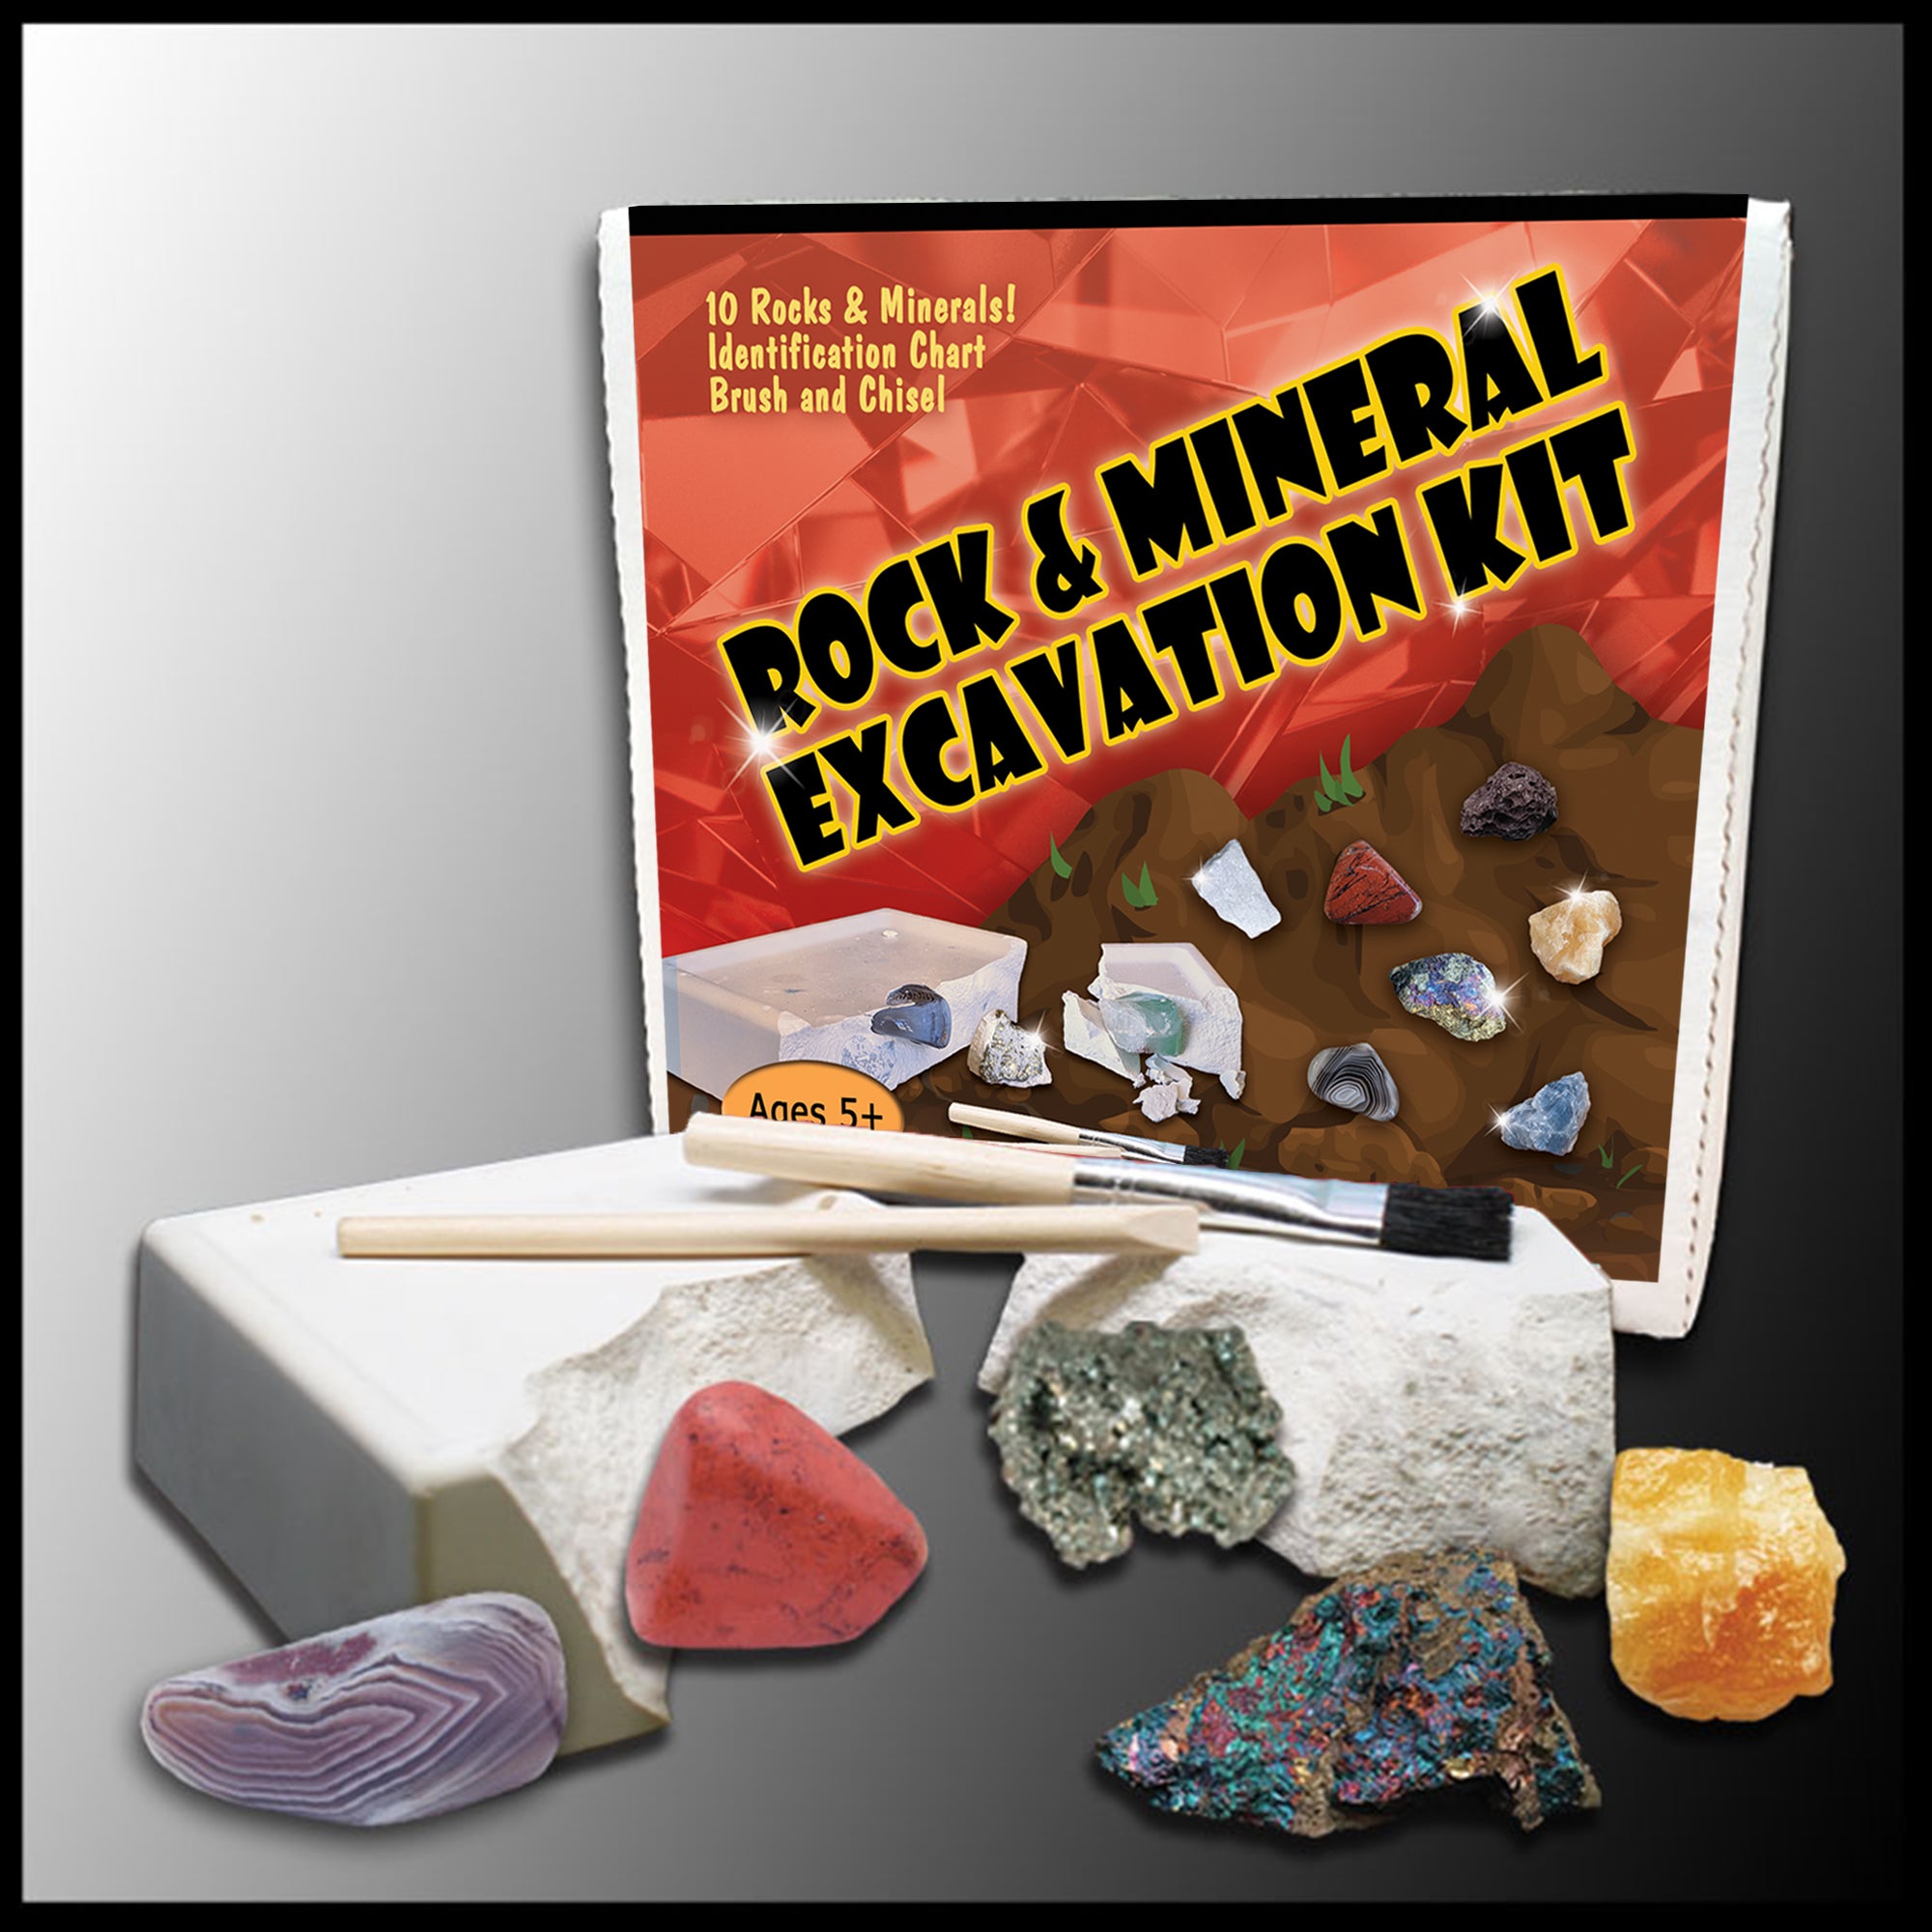 I Dig It! Real Minerals Excavation Kit